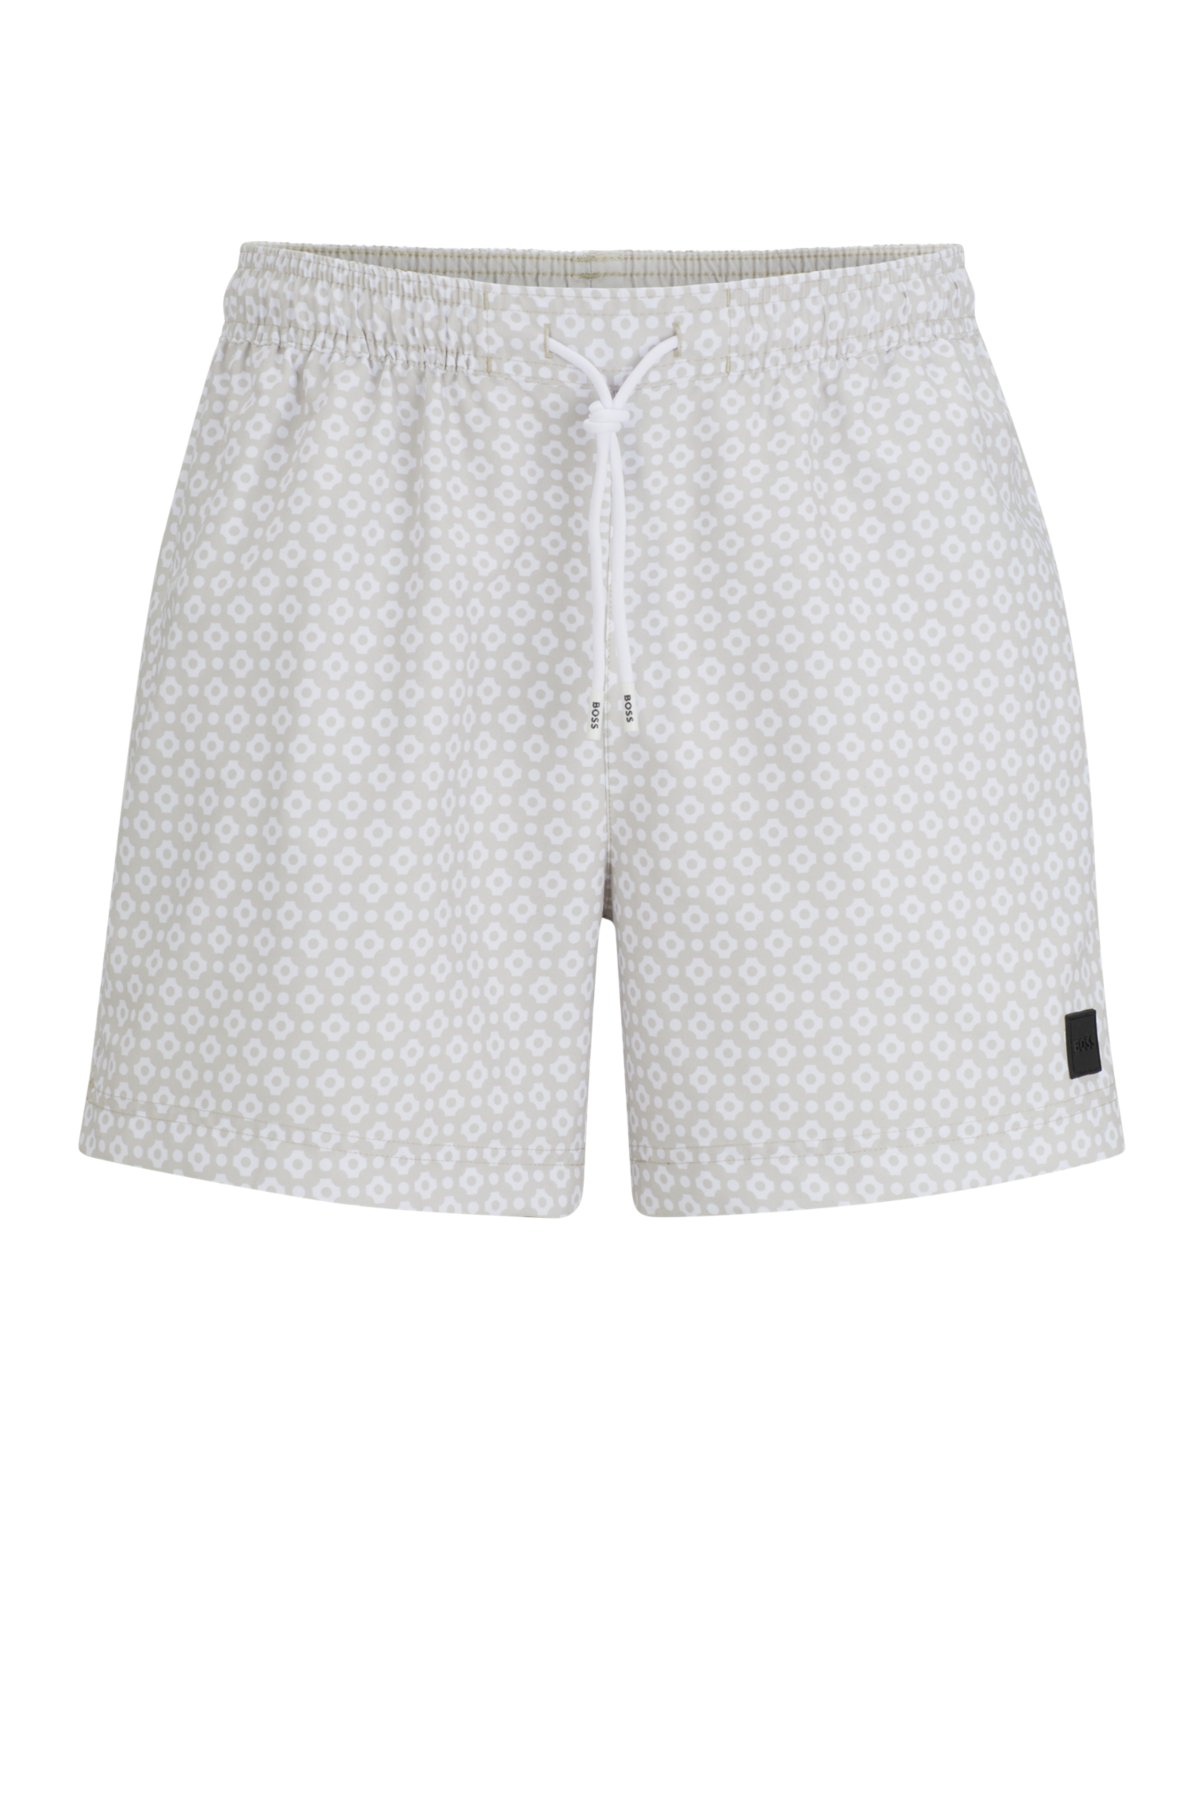 Micro-print quick-drying swim shorts with logo detail, White